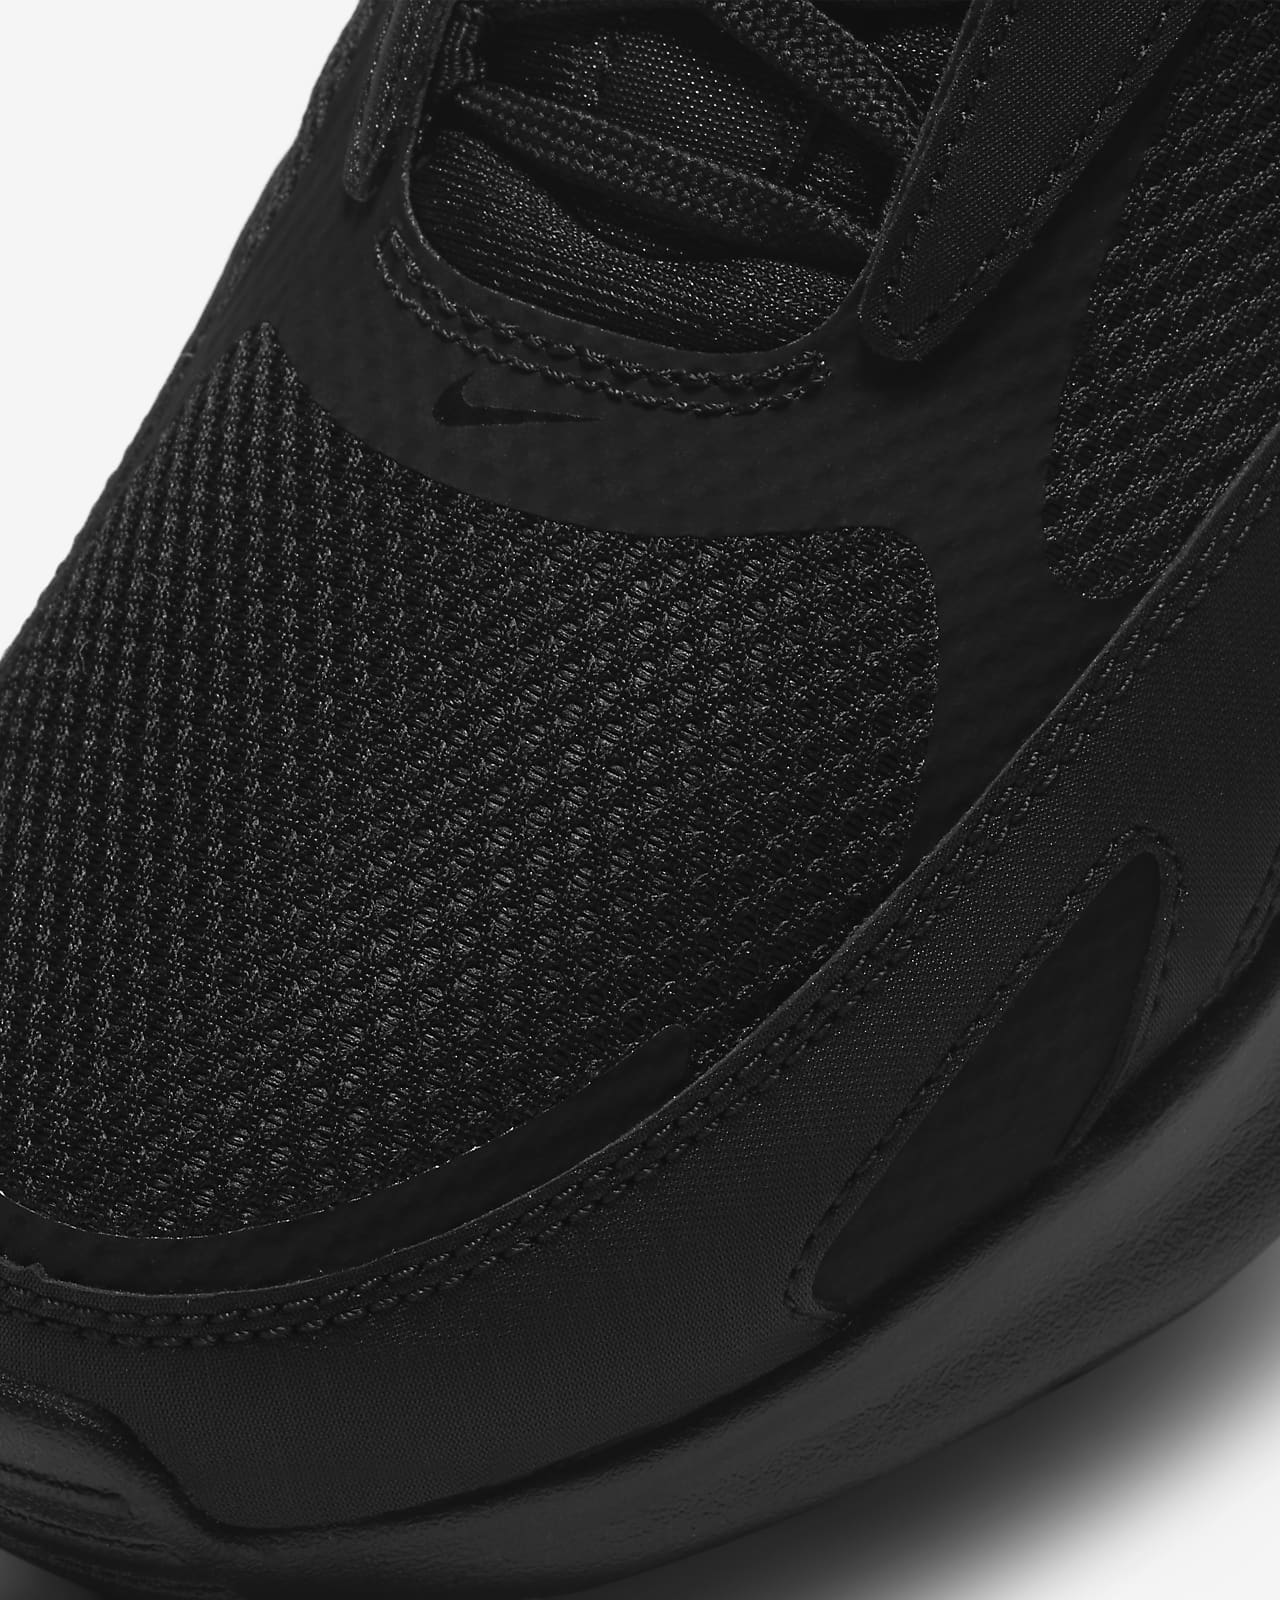 Nike air max black